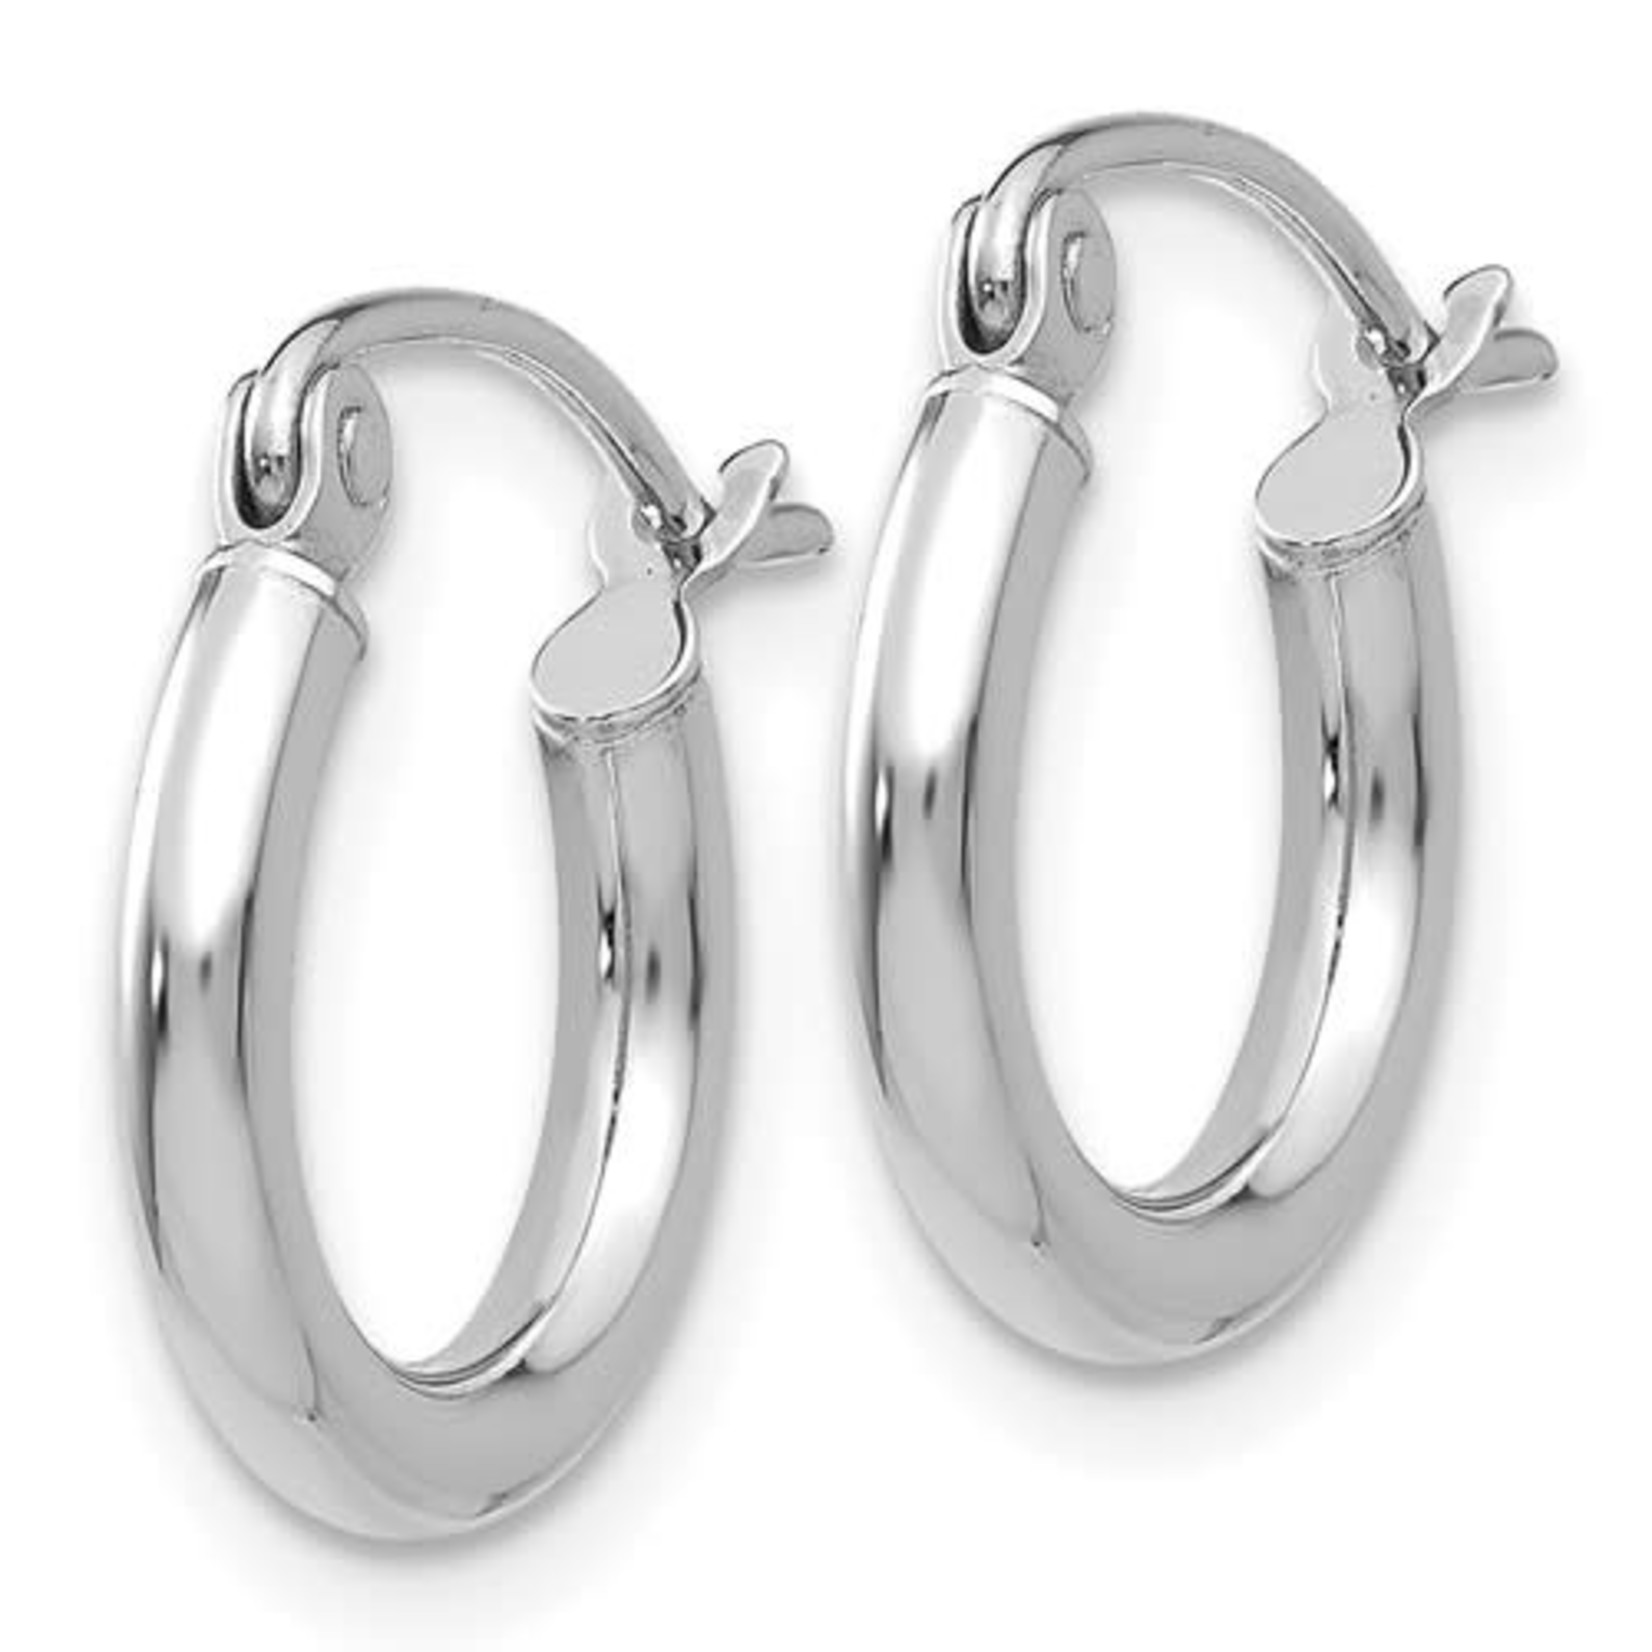 QUALITY GOLD OF CINCINNATI INC 14KW 2x13mm Polished Hoop Earrings